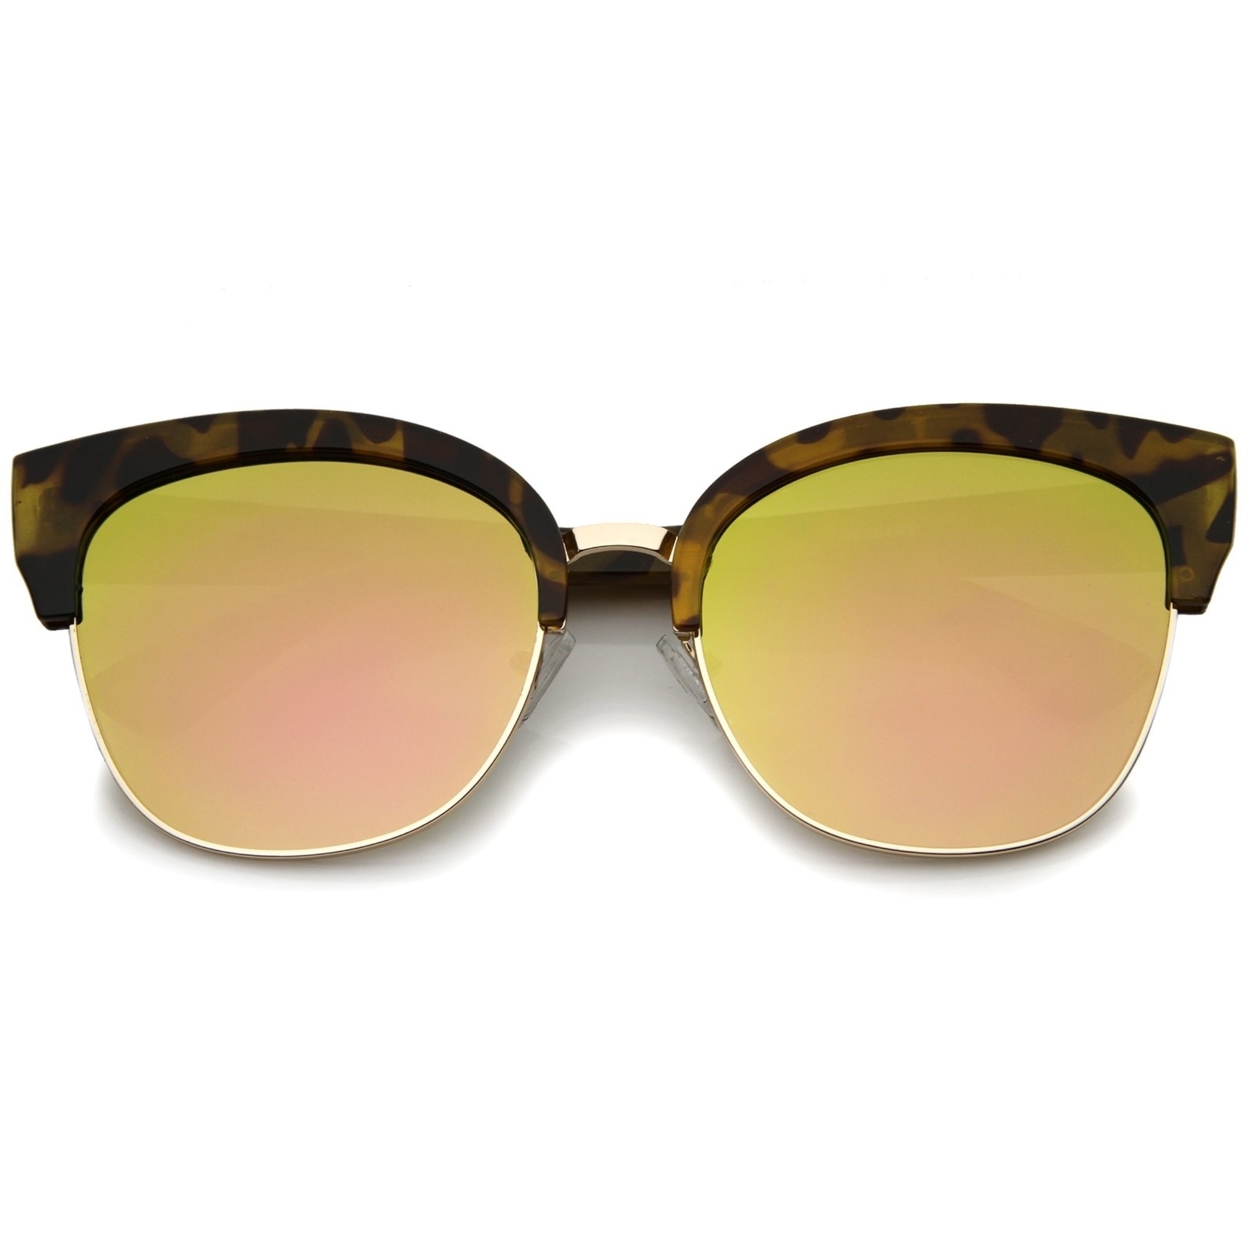 Modern Oversized Half-Frame Color Mirror Flat Lens Cat Eye Sunglasses 58mm - Black / Gold Mirror